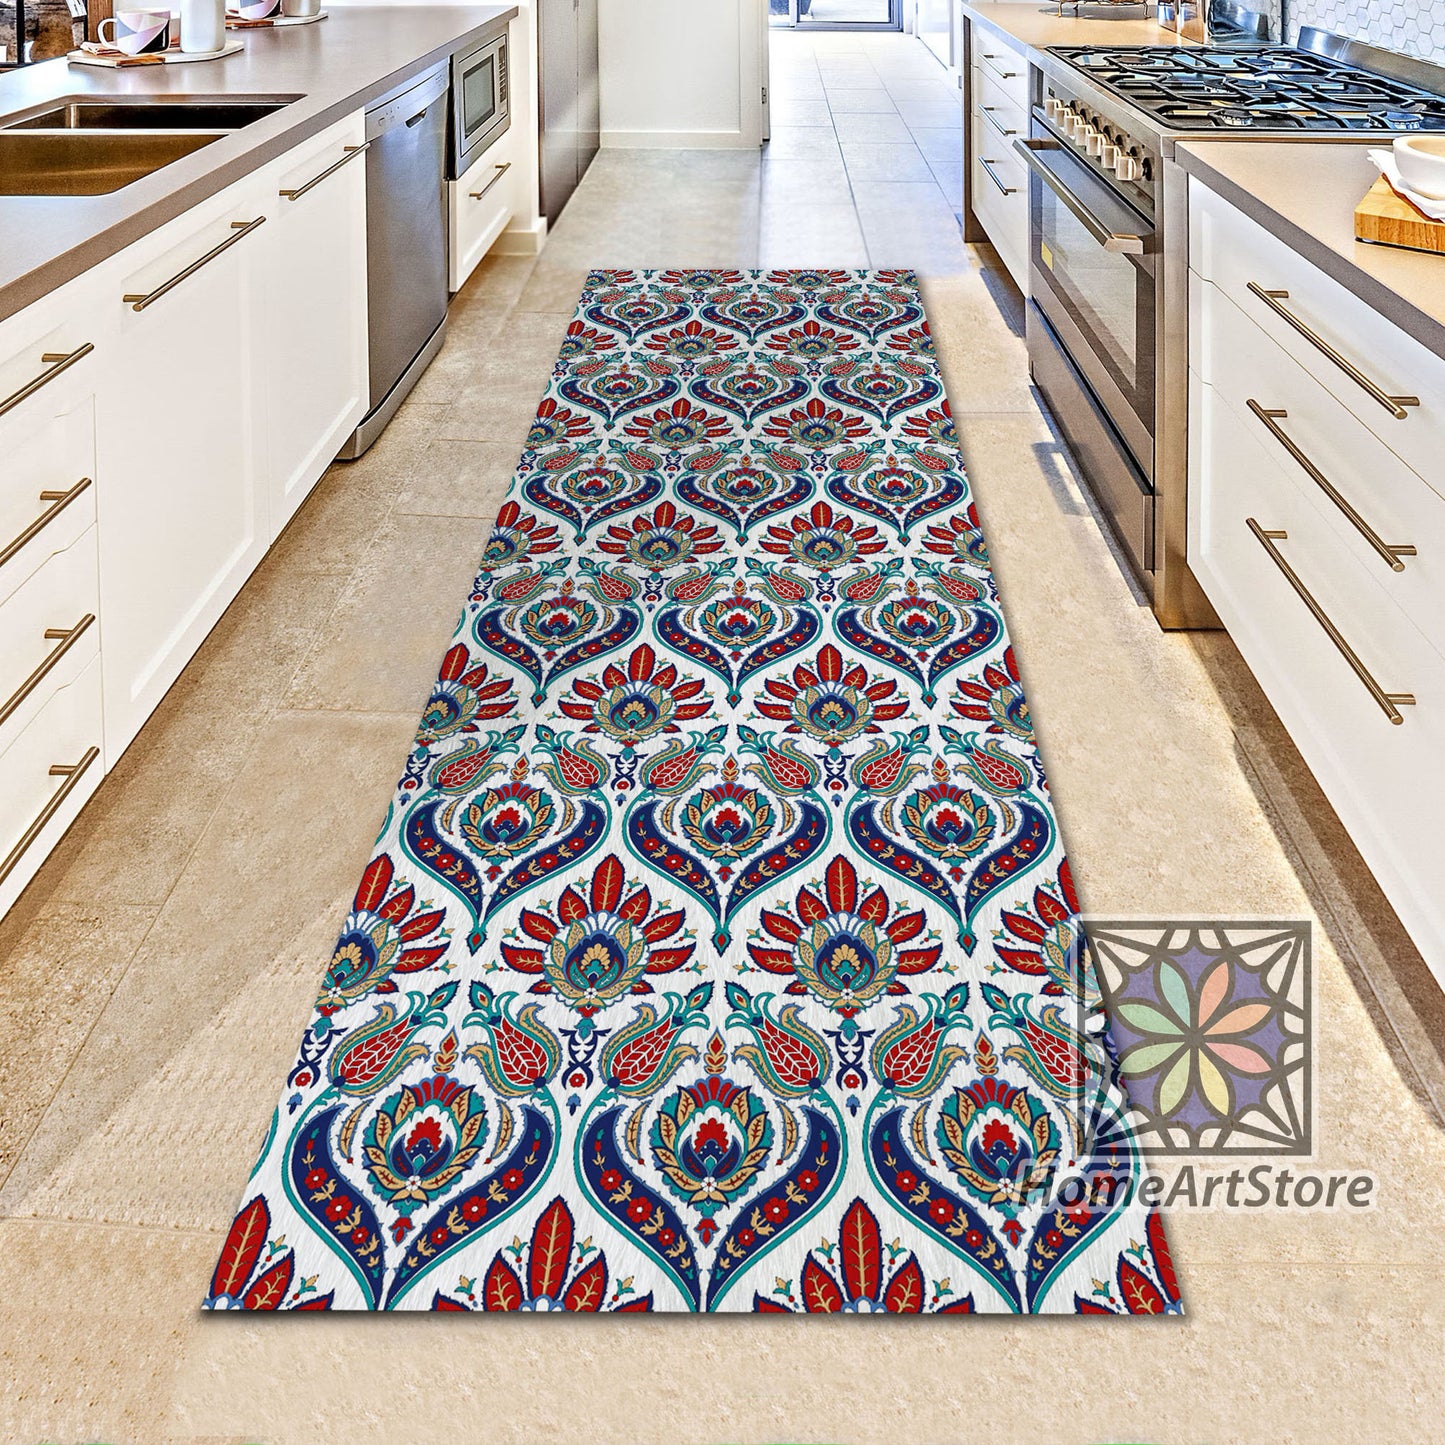 Turkish Style Runner Rug, Ottoman Motif Runner Carpet, Colorful Kitchen Runner Mat, Hallway Carpet, Arabic Decor